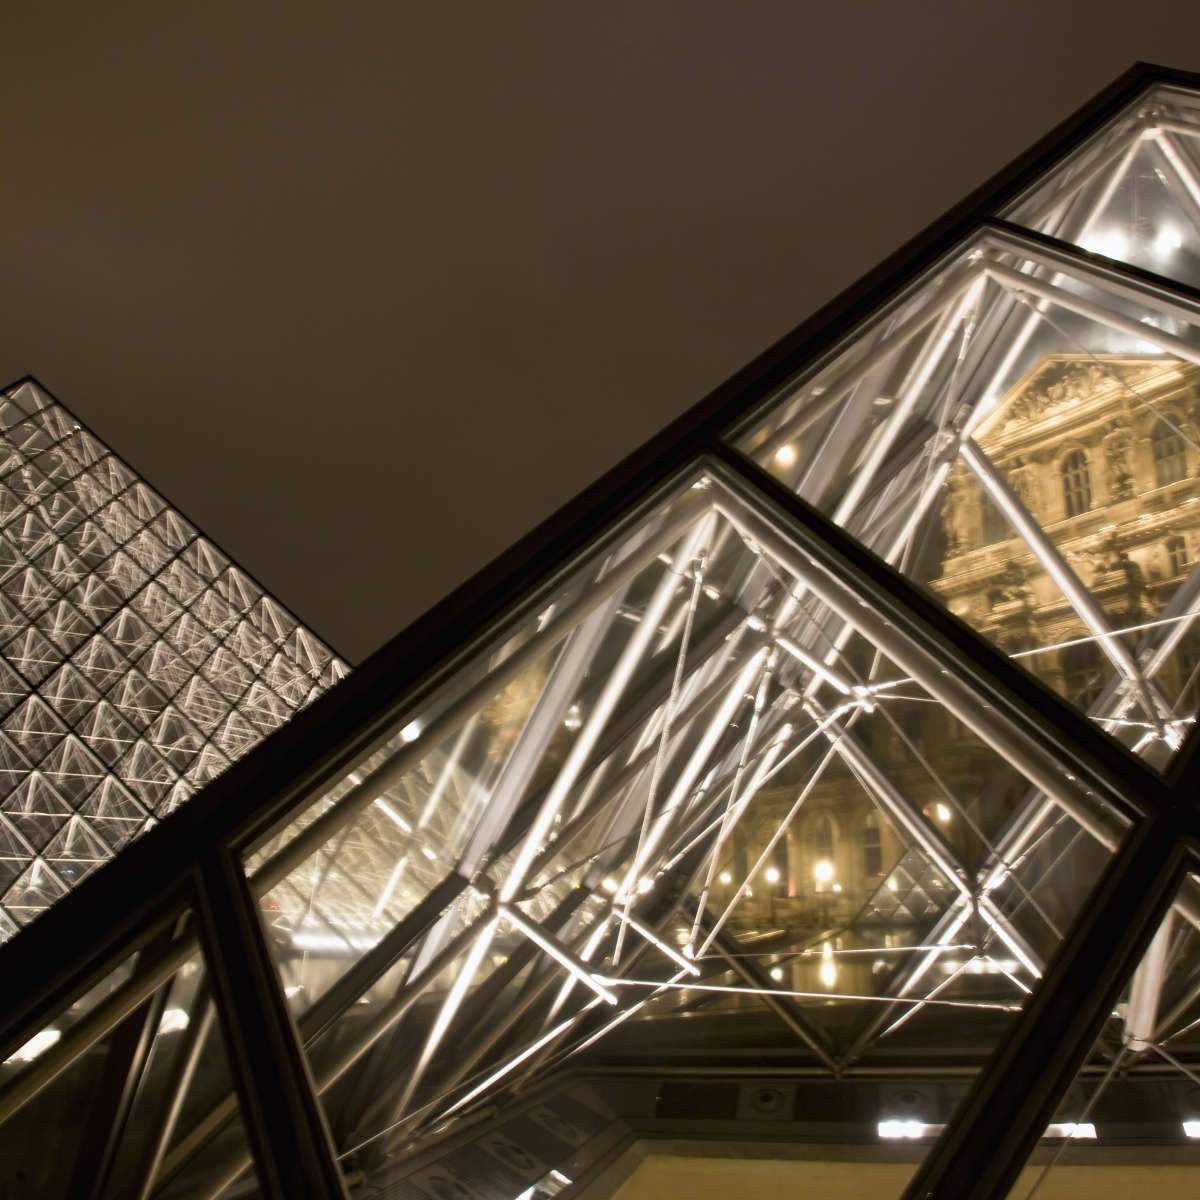 Louvre Museum Architecture